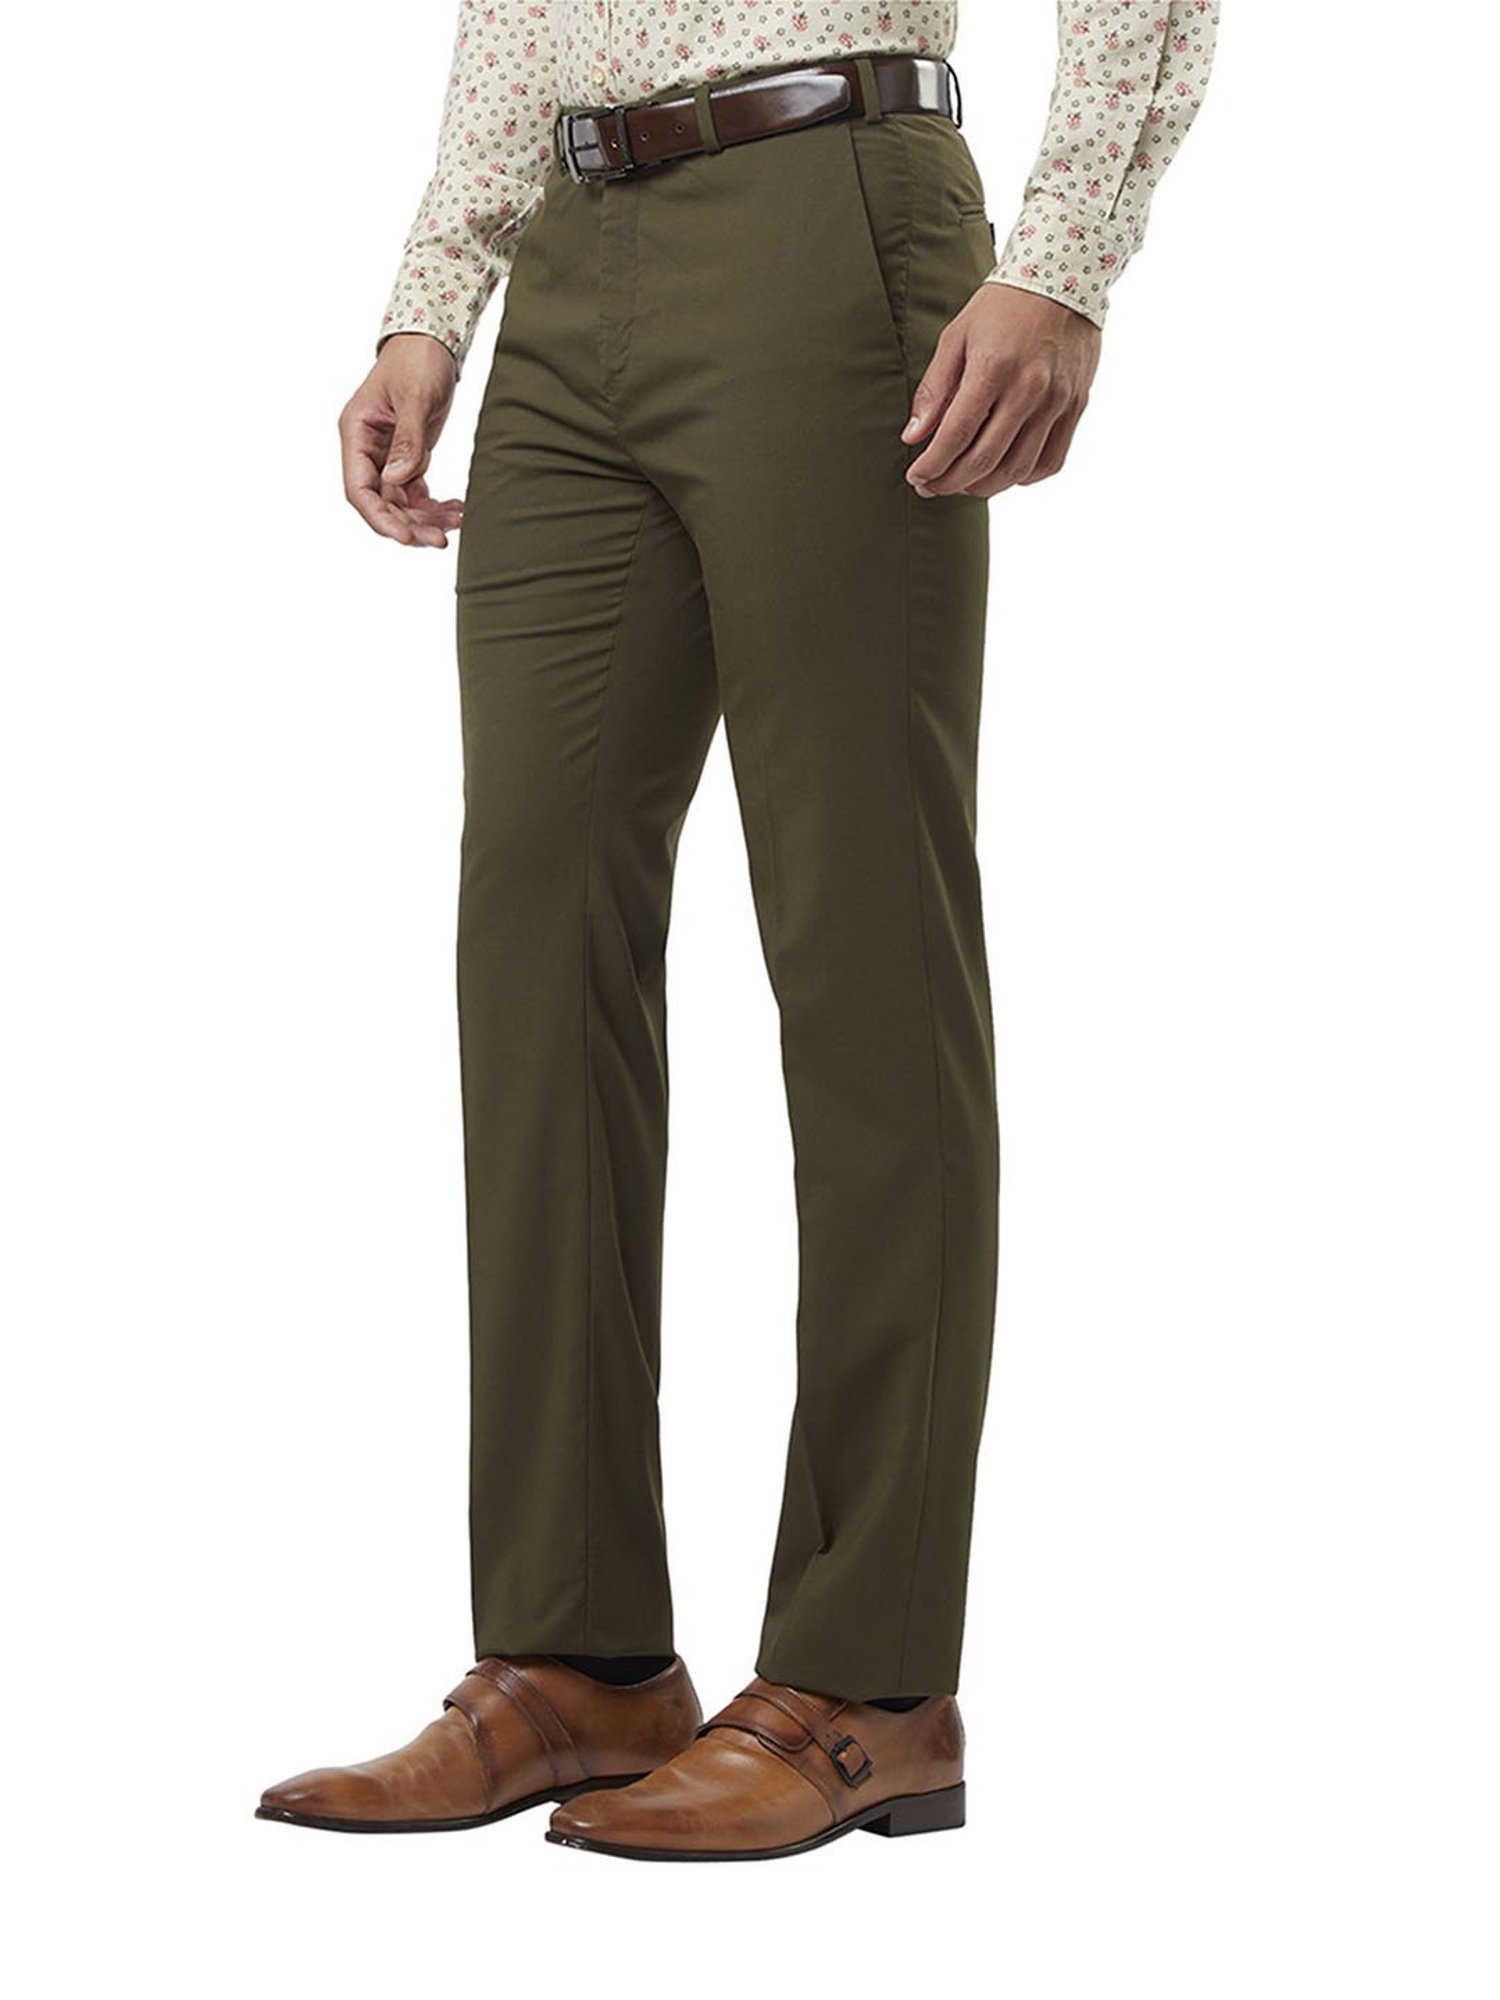 Dark Olive Casual Trouser for Men  Solid  100 Cotton Uno Fit  JadeBlue   JadeBlue Lifestyle